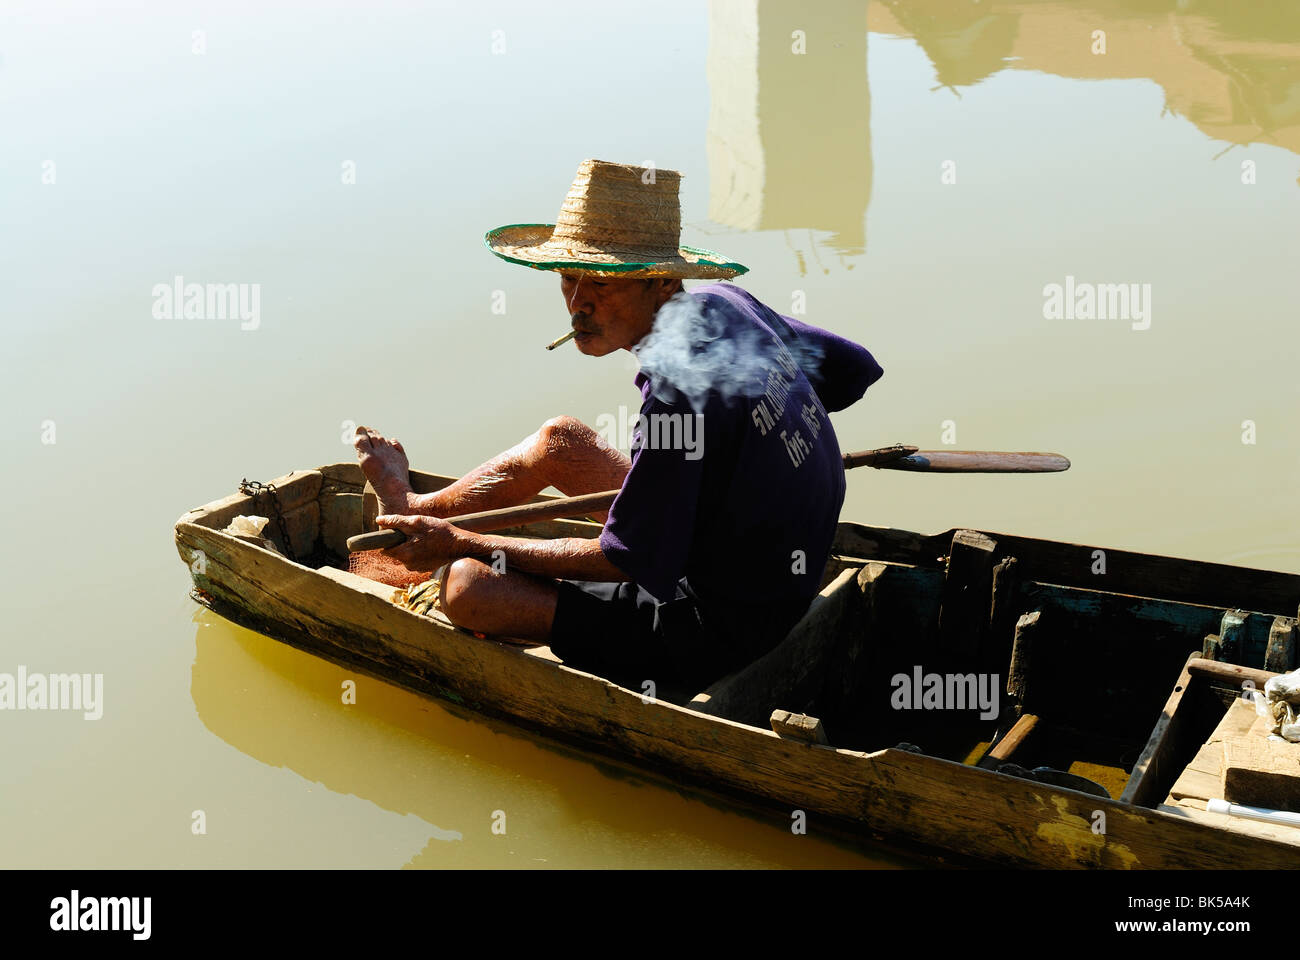 Alter Mann paddeln Kanu am Mae Ping River in der Stadt Chiang Mai, Thailand Stockfoto